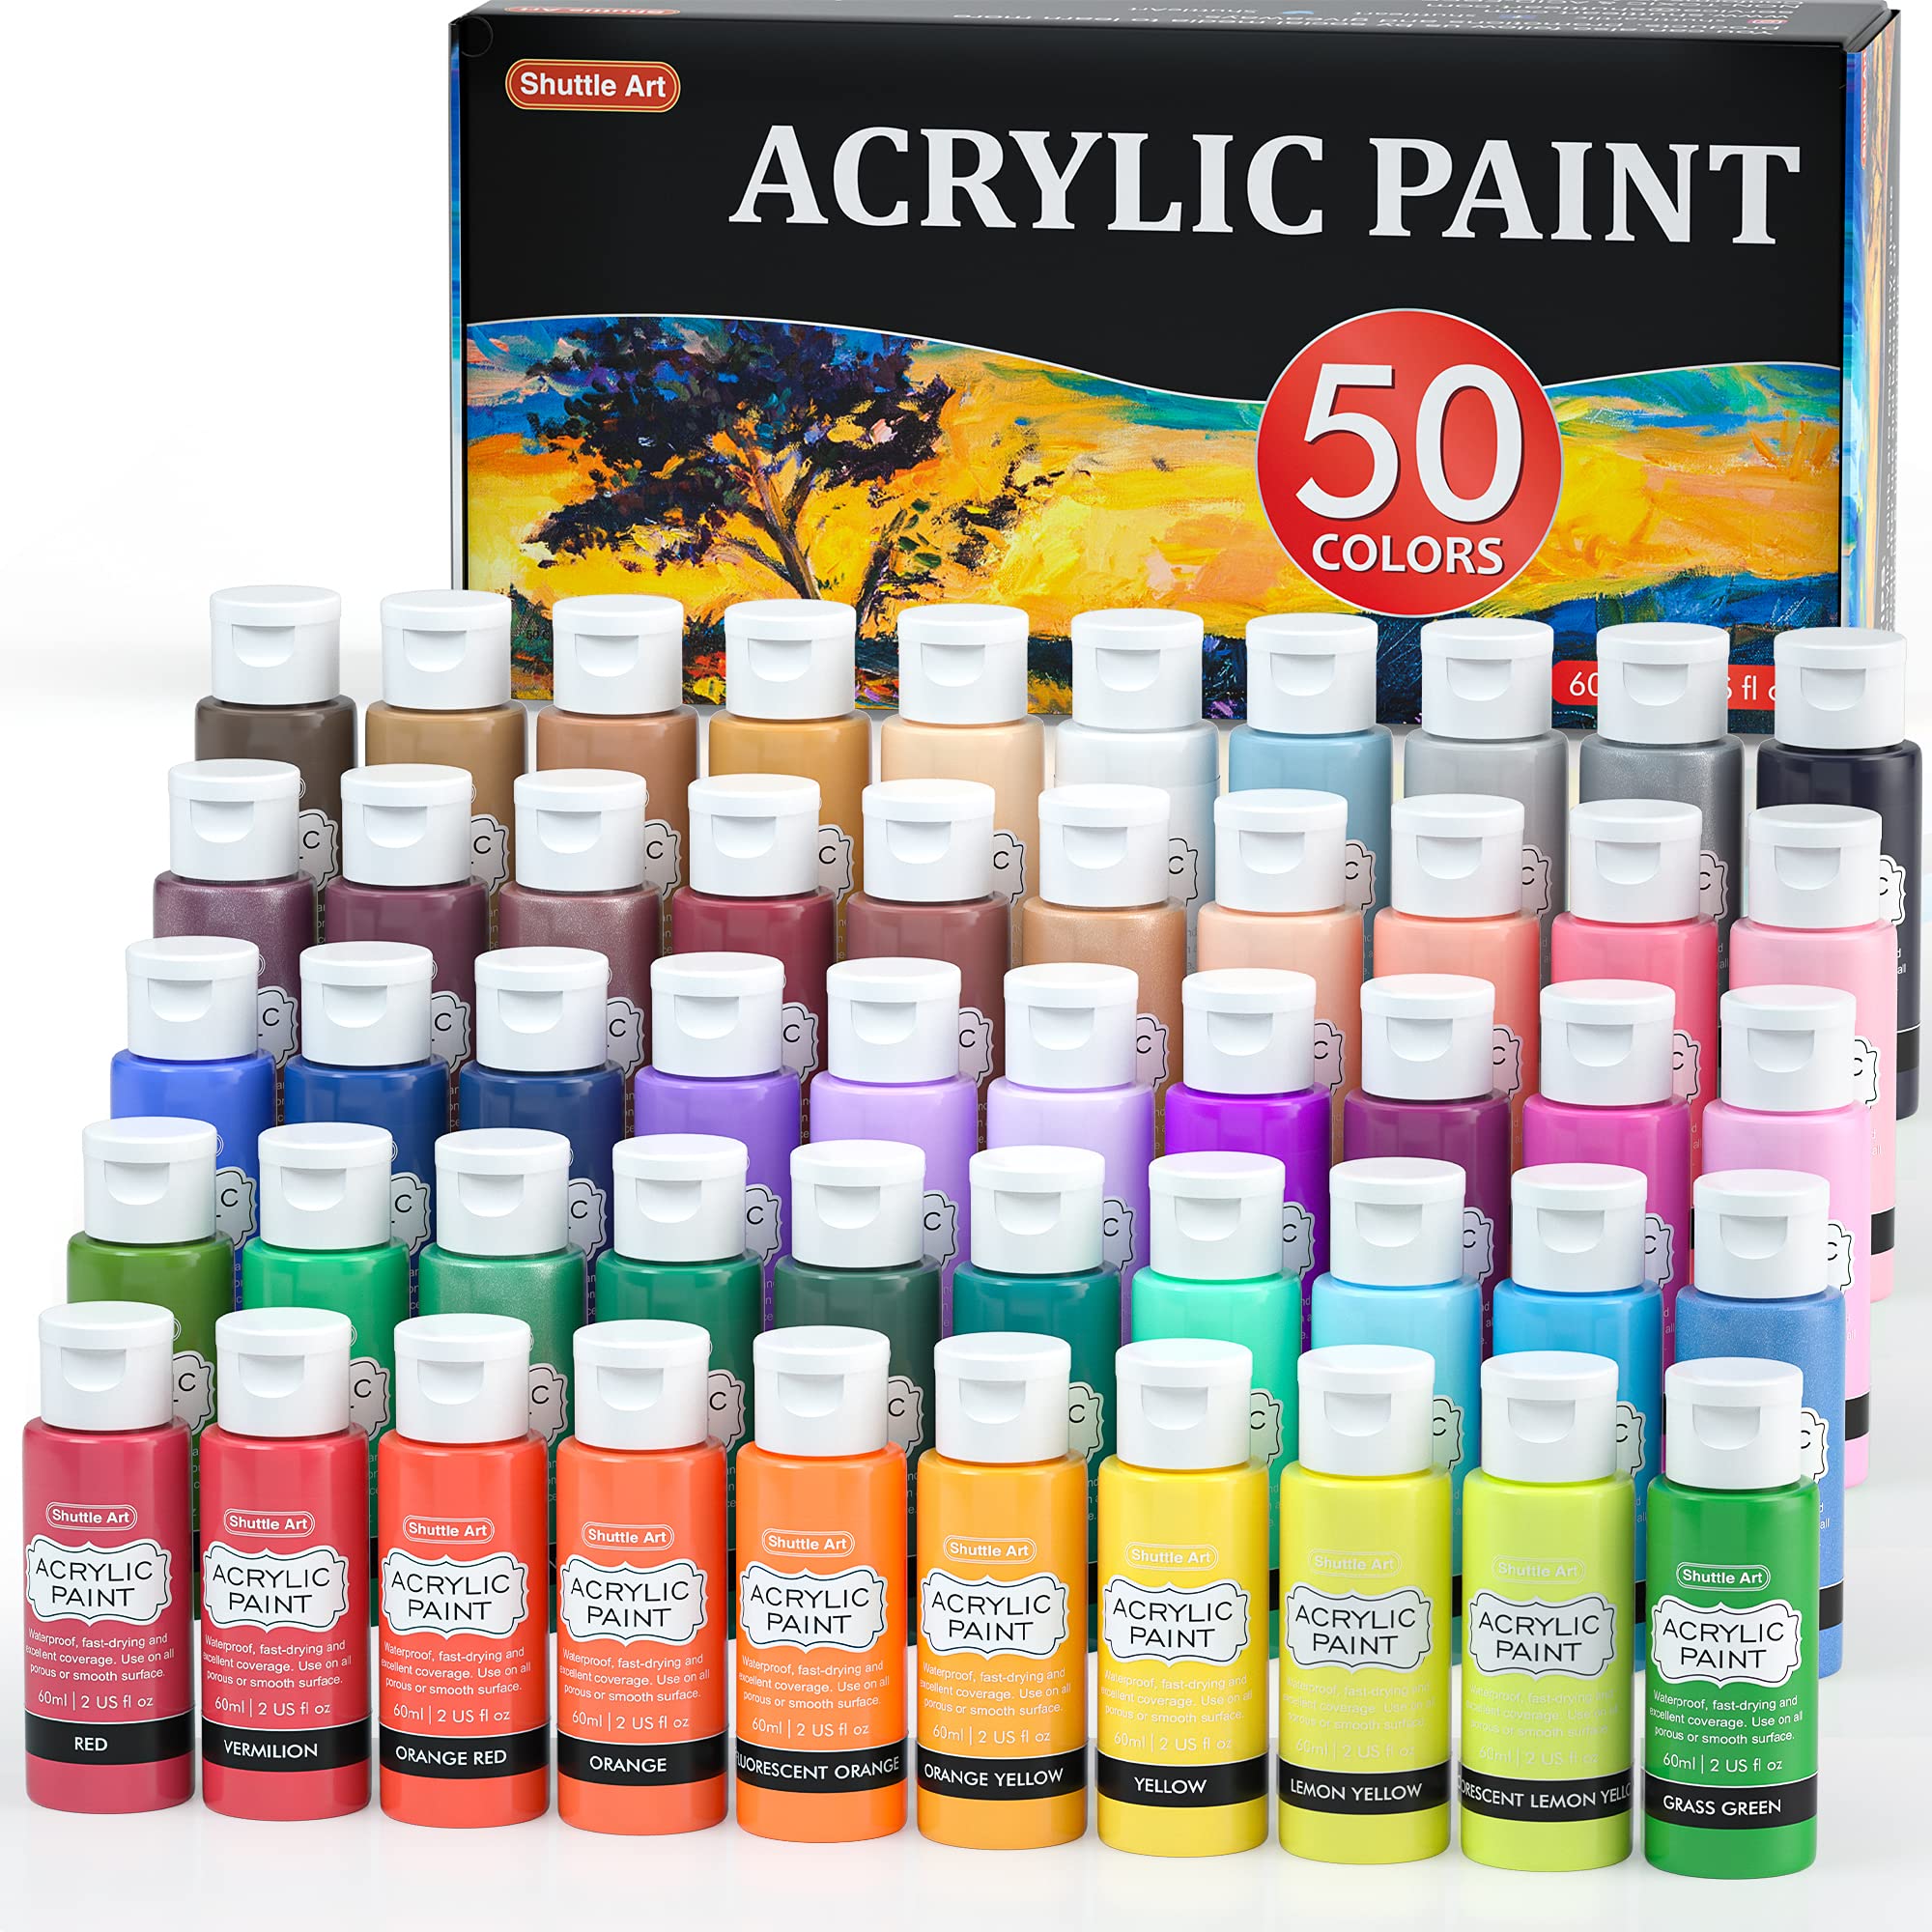 Shuttle Art Acrylic Paint 50 Colors Acrylic Paint Set 2oz/60ml